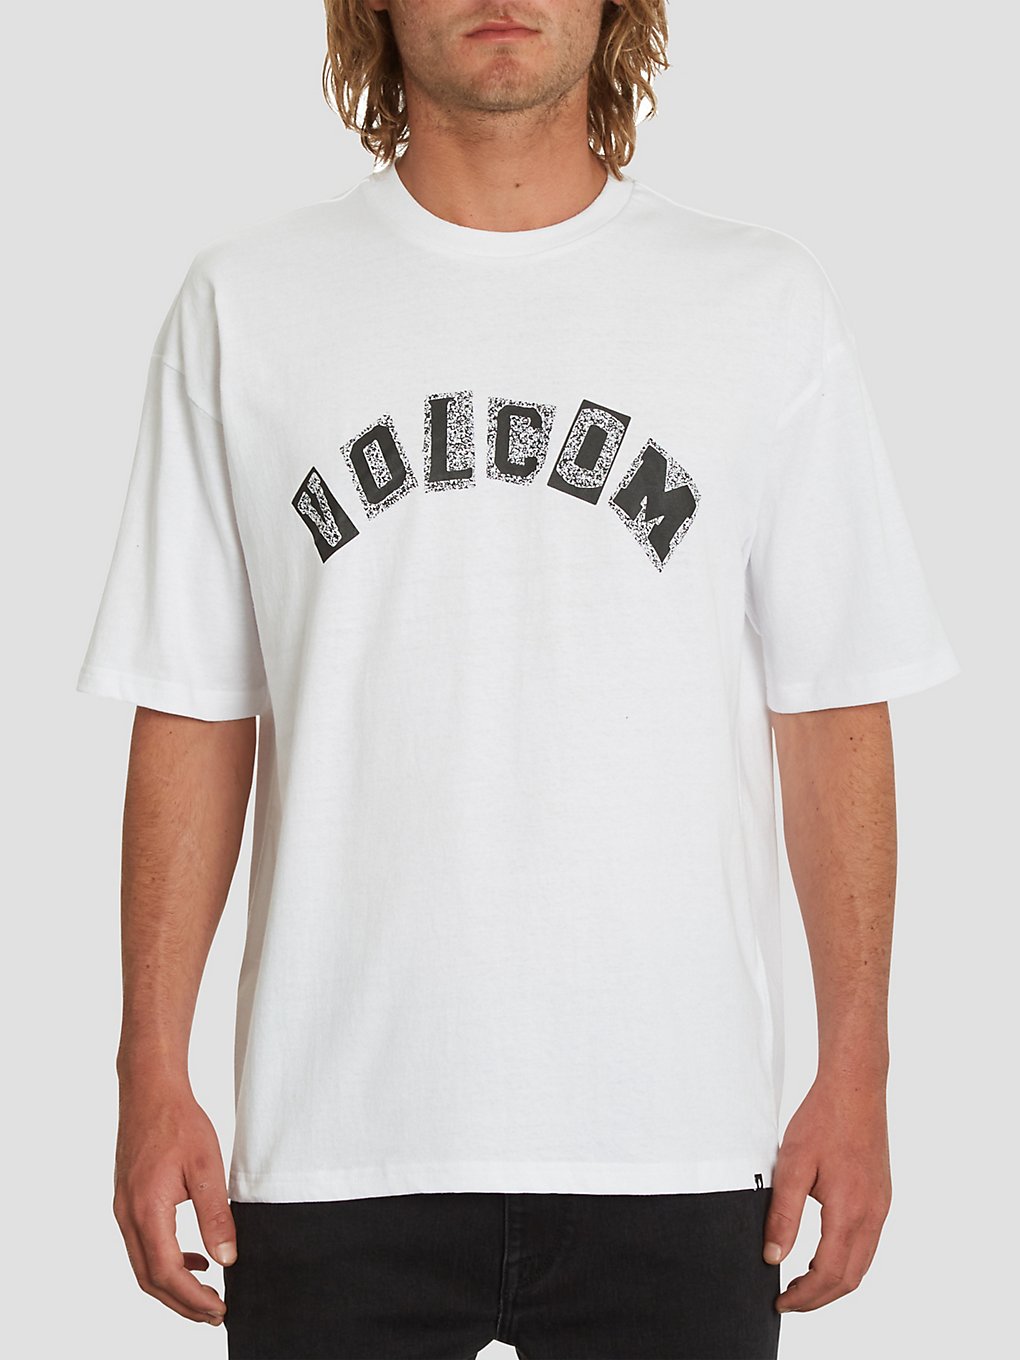 Volcom Hi School Loose Fit T-Shirt white kaufen